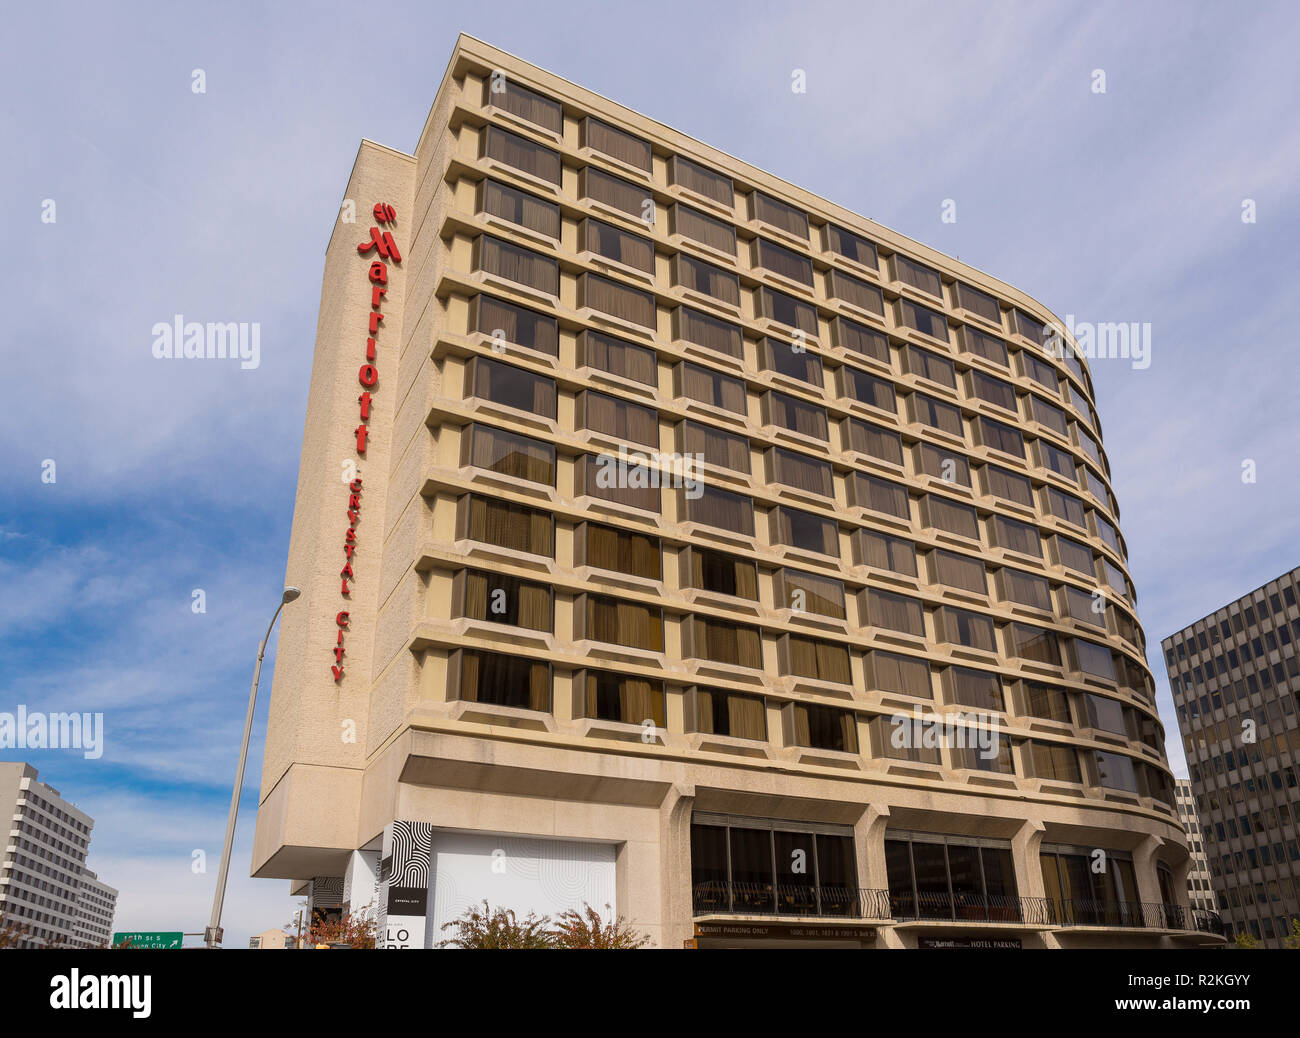 CRYSTAL CITY, VIRGINIA, USA - Marriott Hotel in Crystal City, location of Amazon HQ2 in Arlington County. Stock Photo